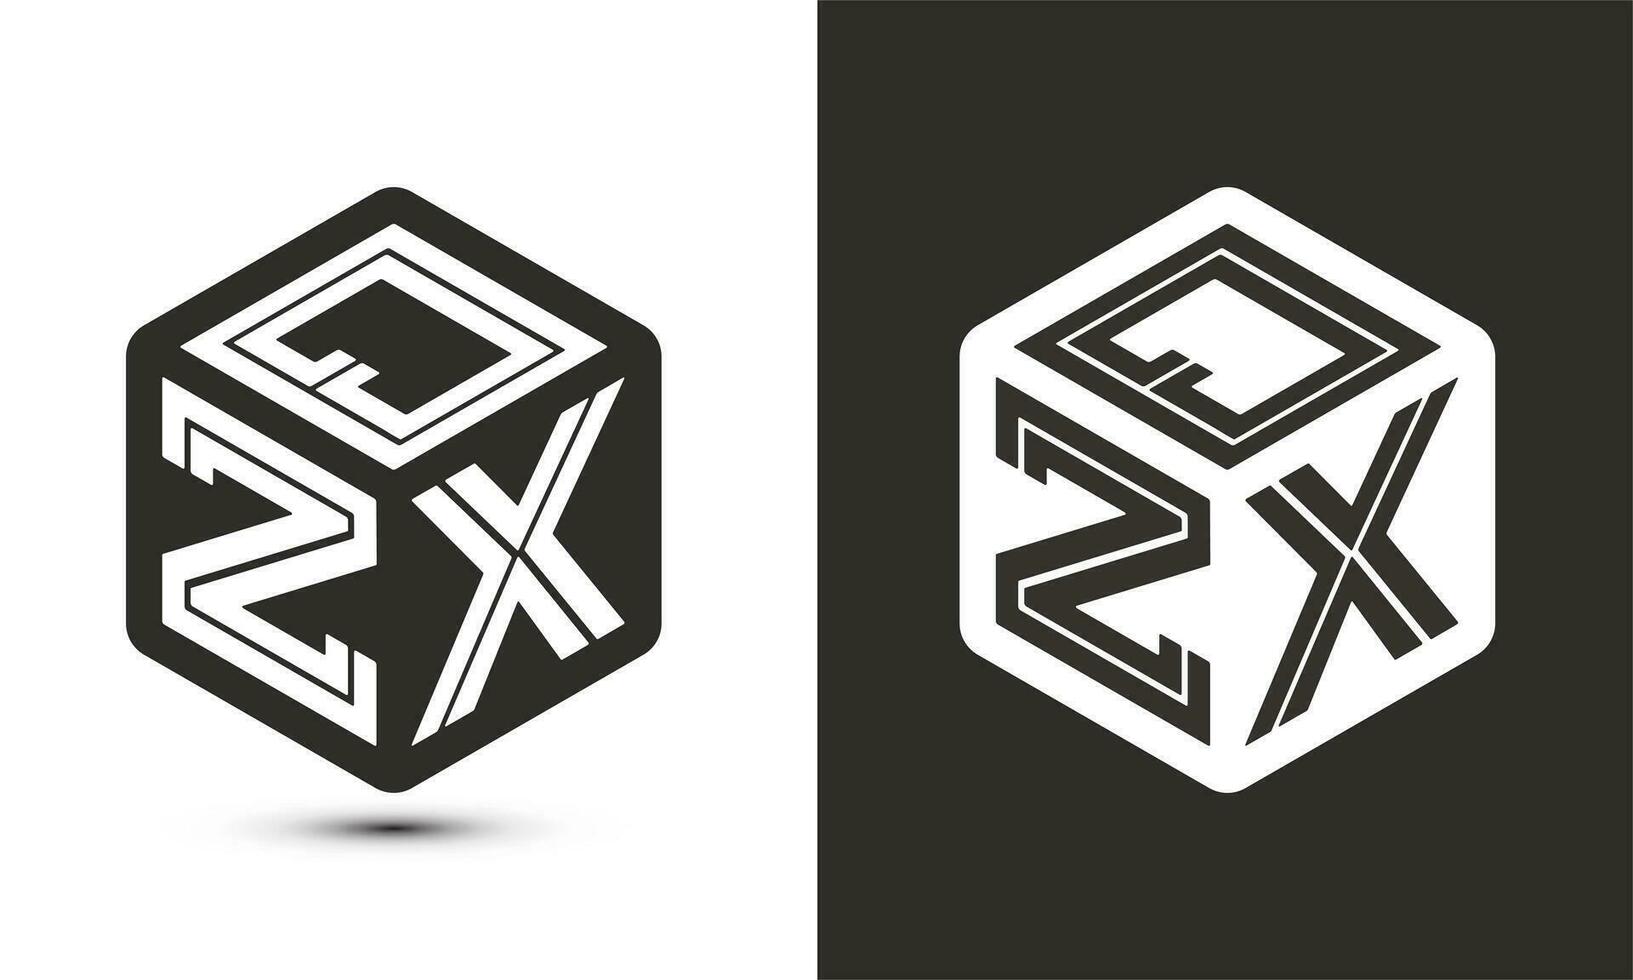 qzx letra logo diseño con ilustrador cubo logo, vector logo moderno alfabeto fuente superposición estilo.